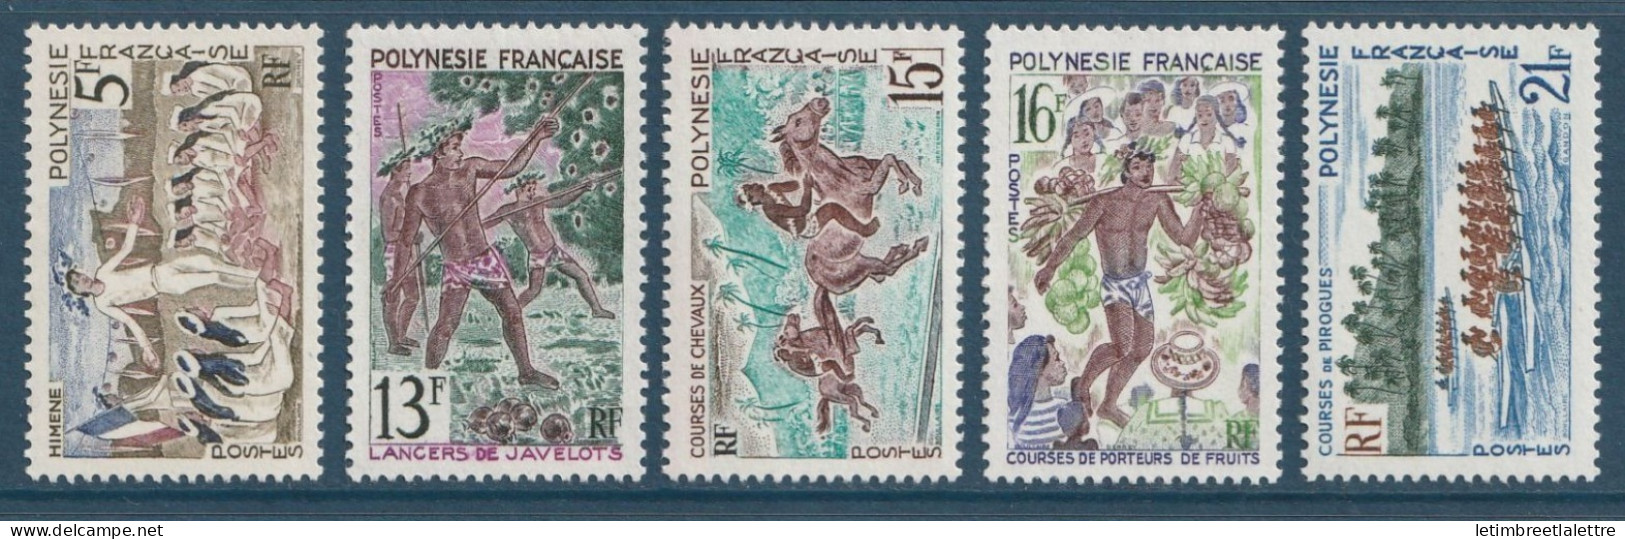 Polynésie - YT N° 47 à 51 ** - Neuf Sans Charnière - 1967 - Nuovi